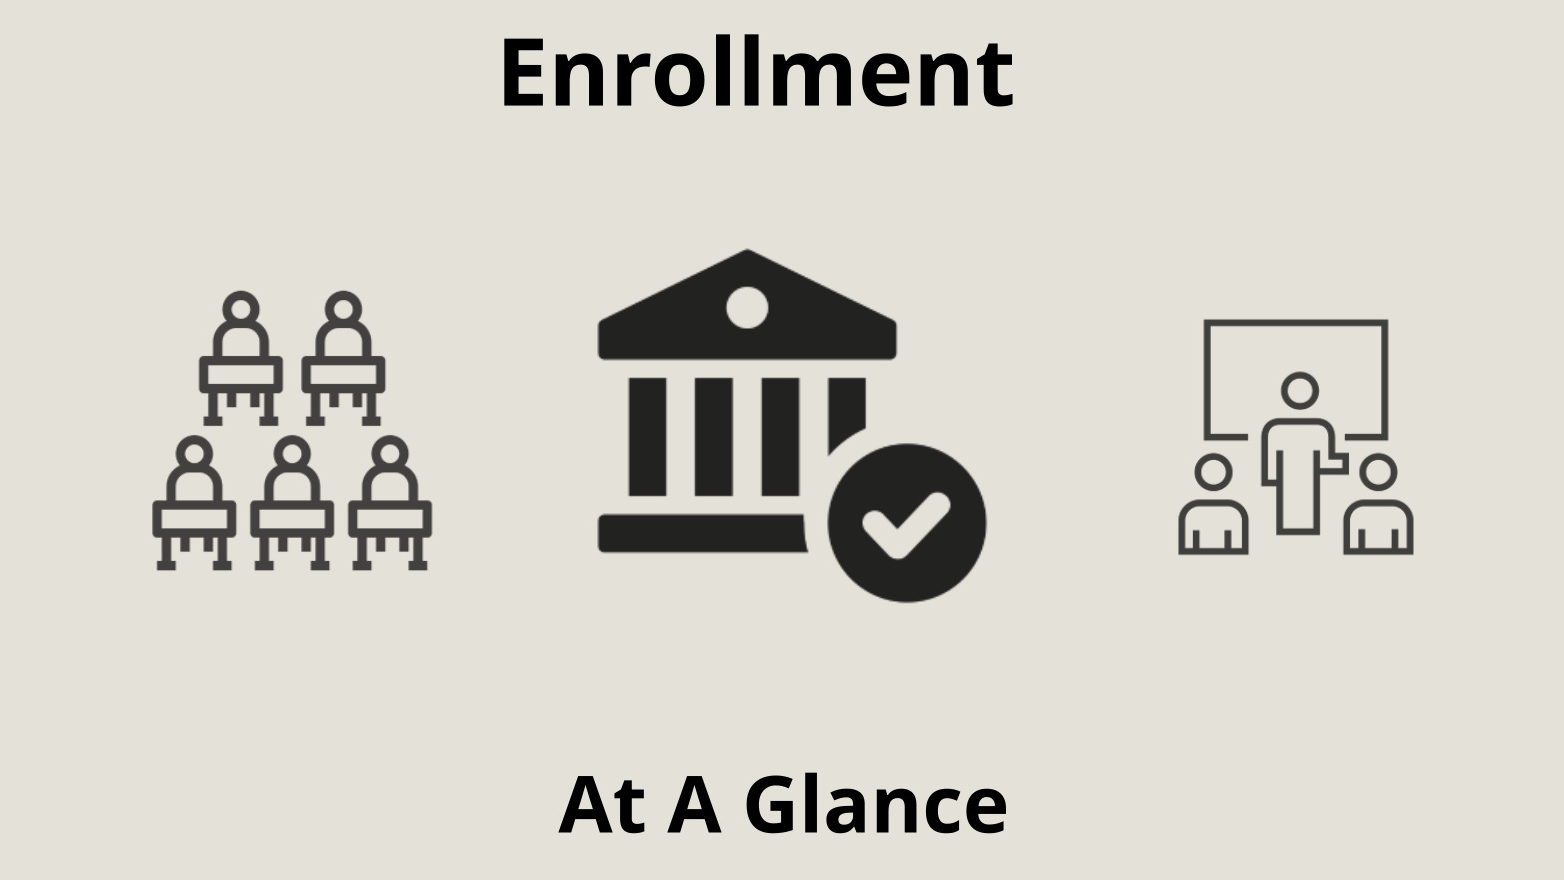 Enrollment at a glance